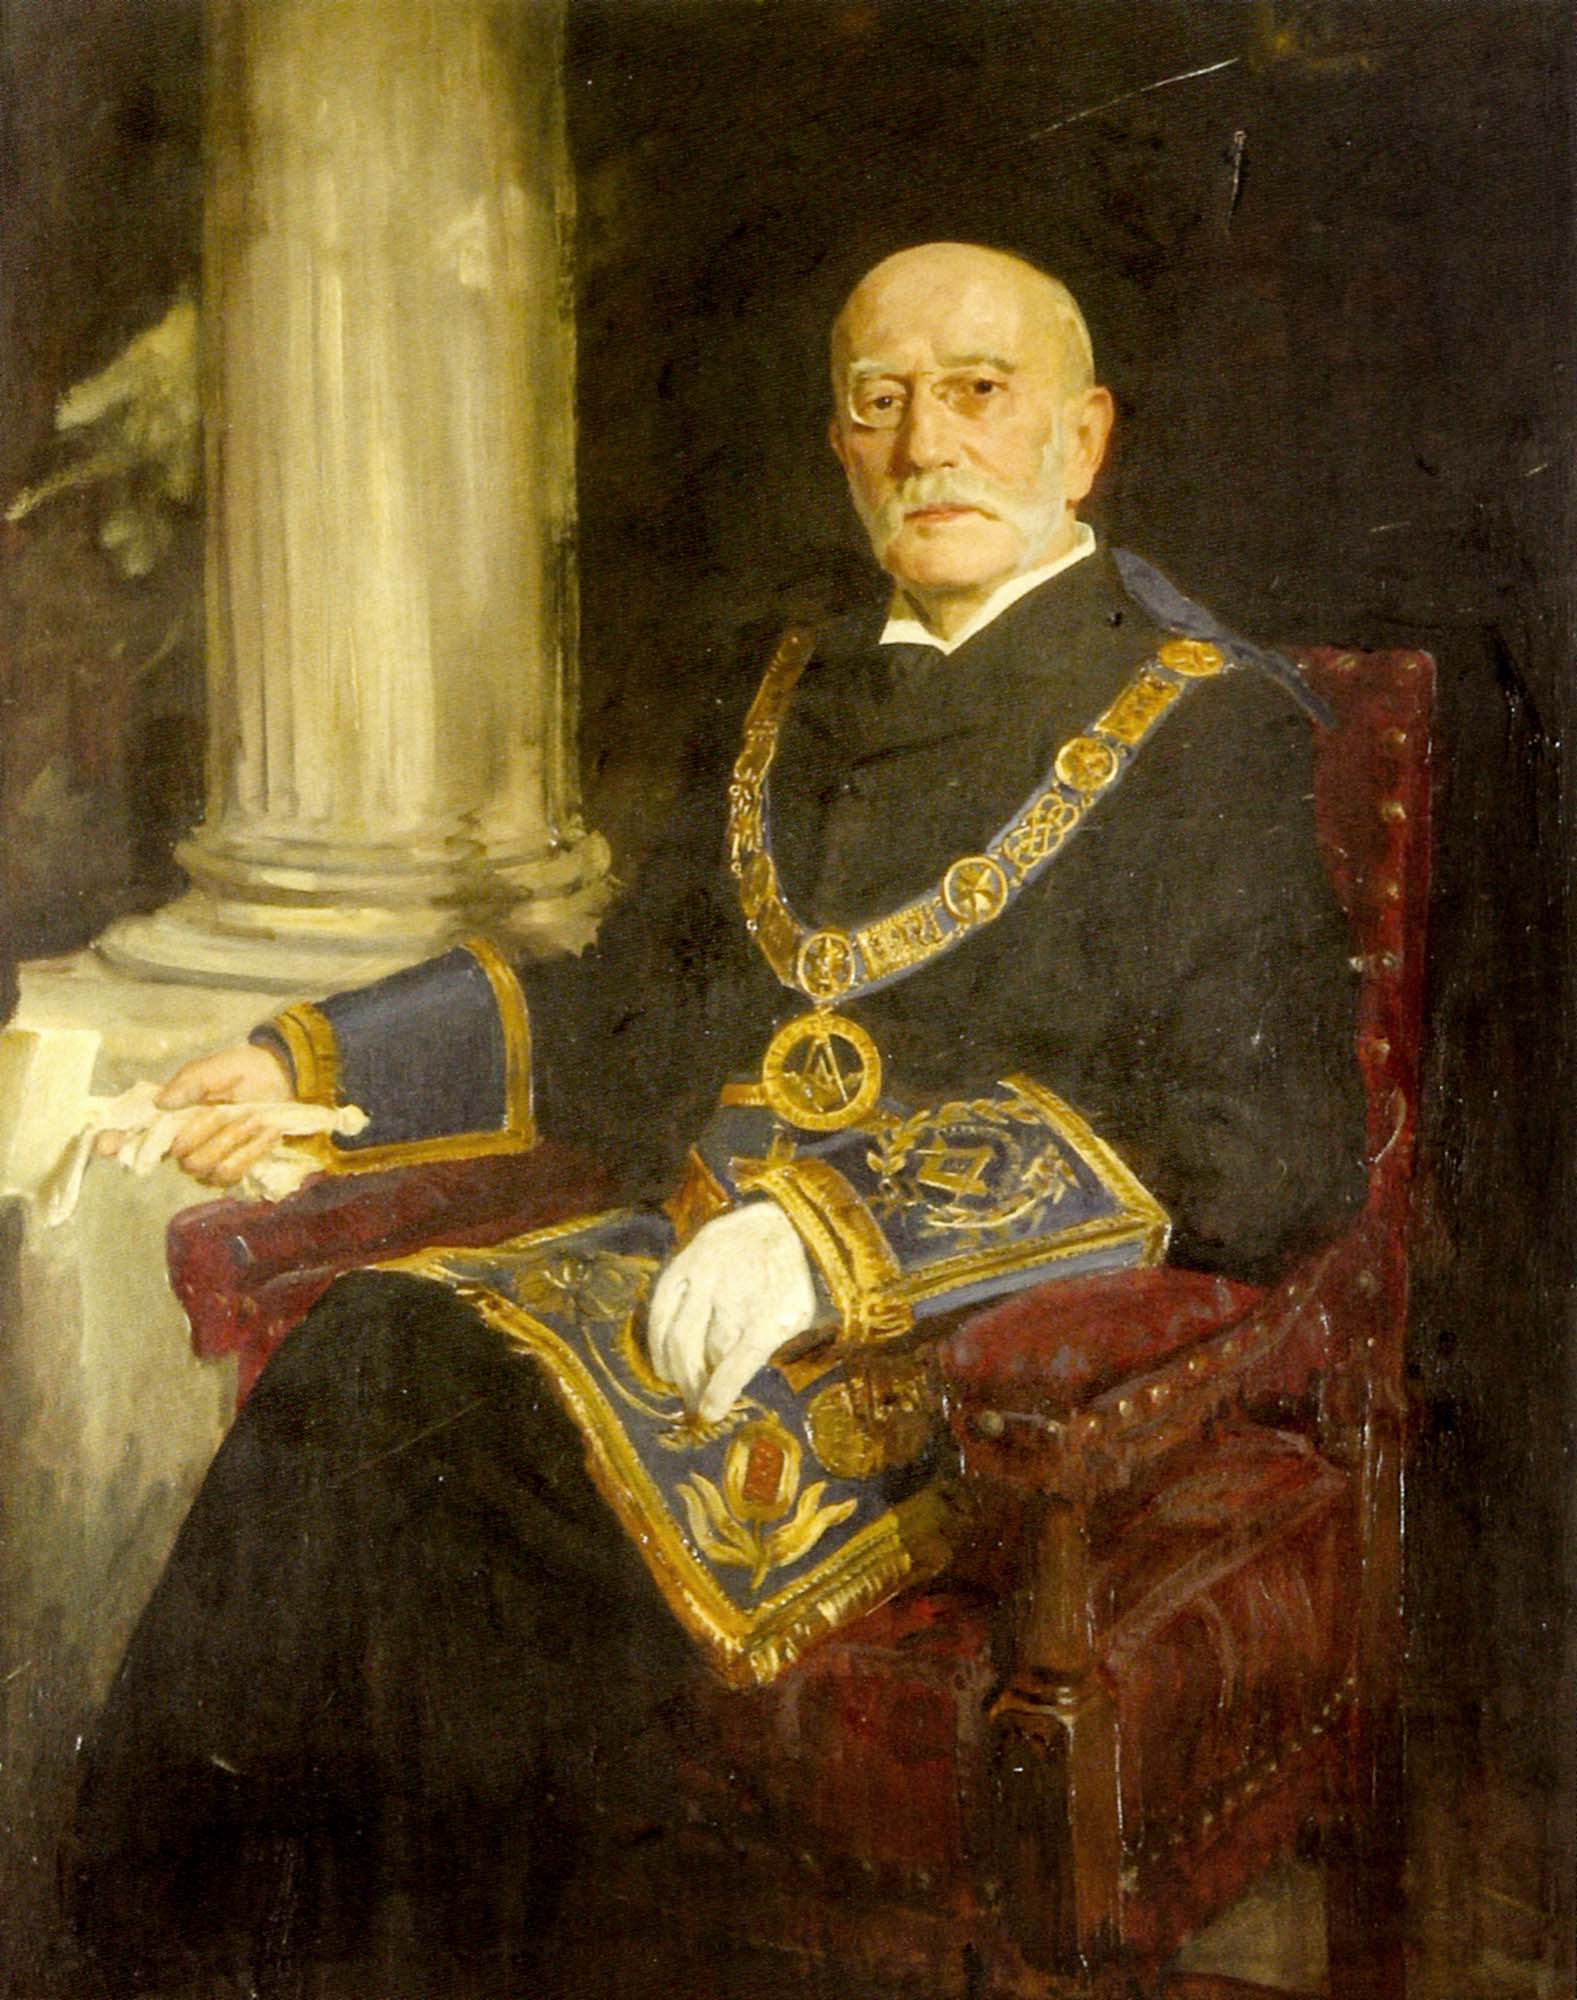 Edward Holmes, Provincial Grand Master, 1913 - 1928 - 